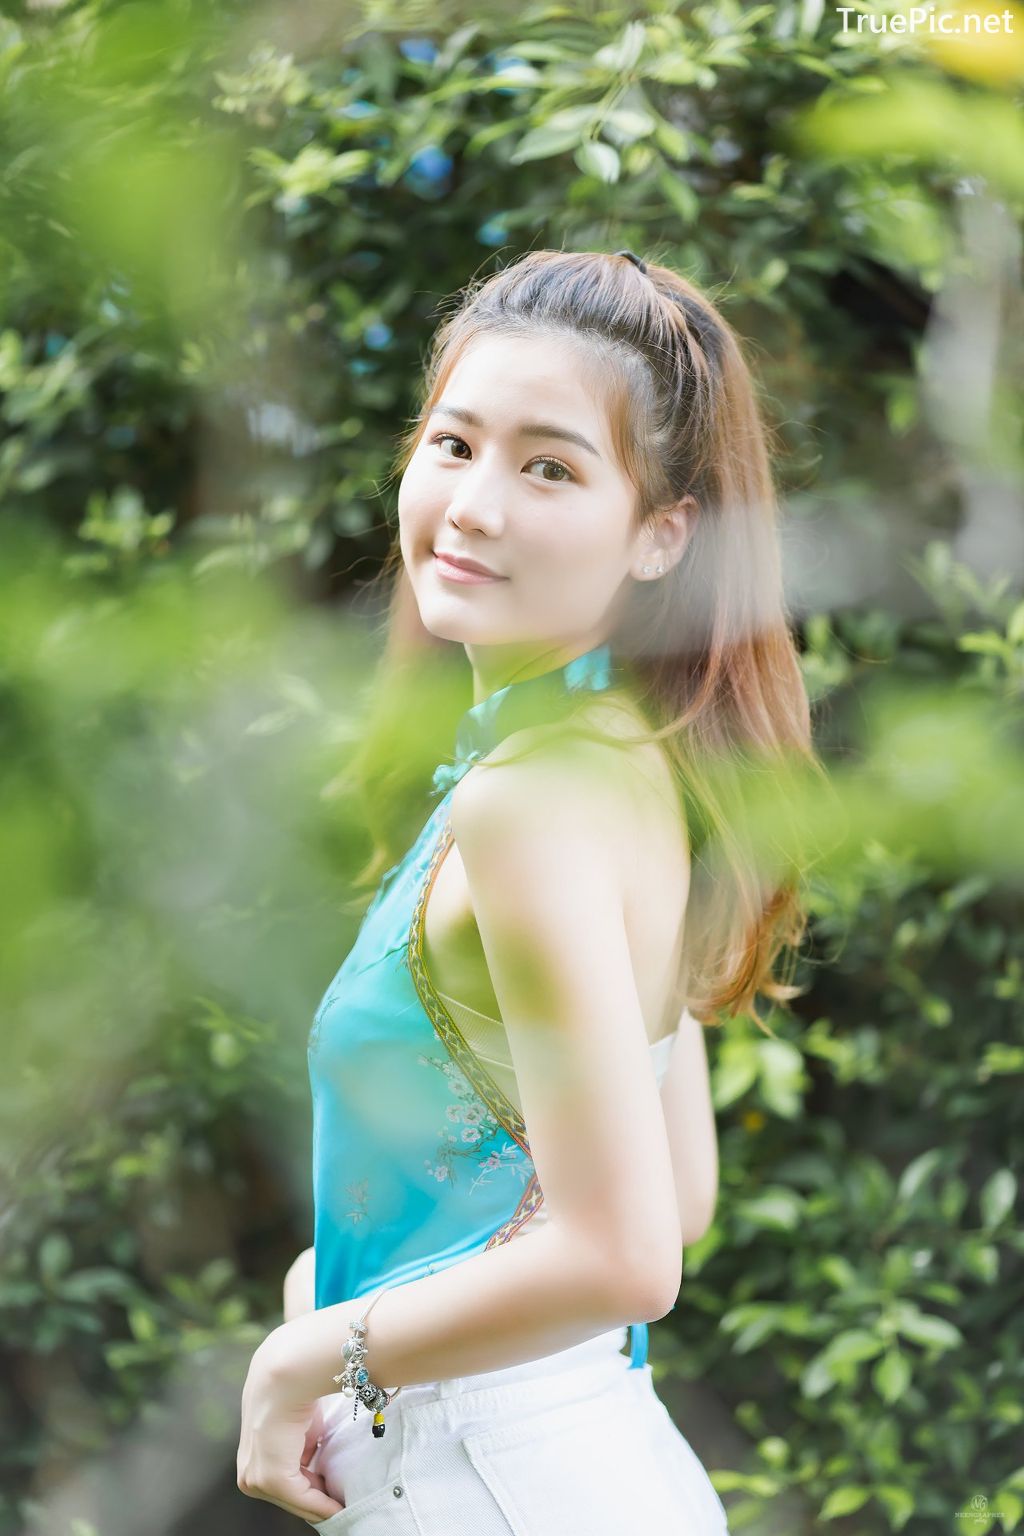 Image-Thailand-Beautiful-Girl-Pattaravadee-Boonmeesup-Blue-Chinese-Traditional-Undershirt-TruePic.net- Picture-18